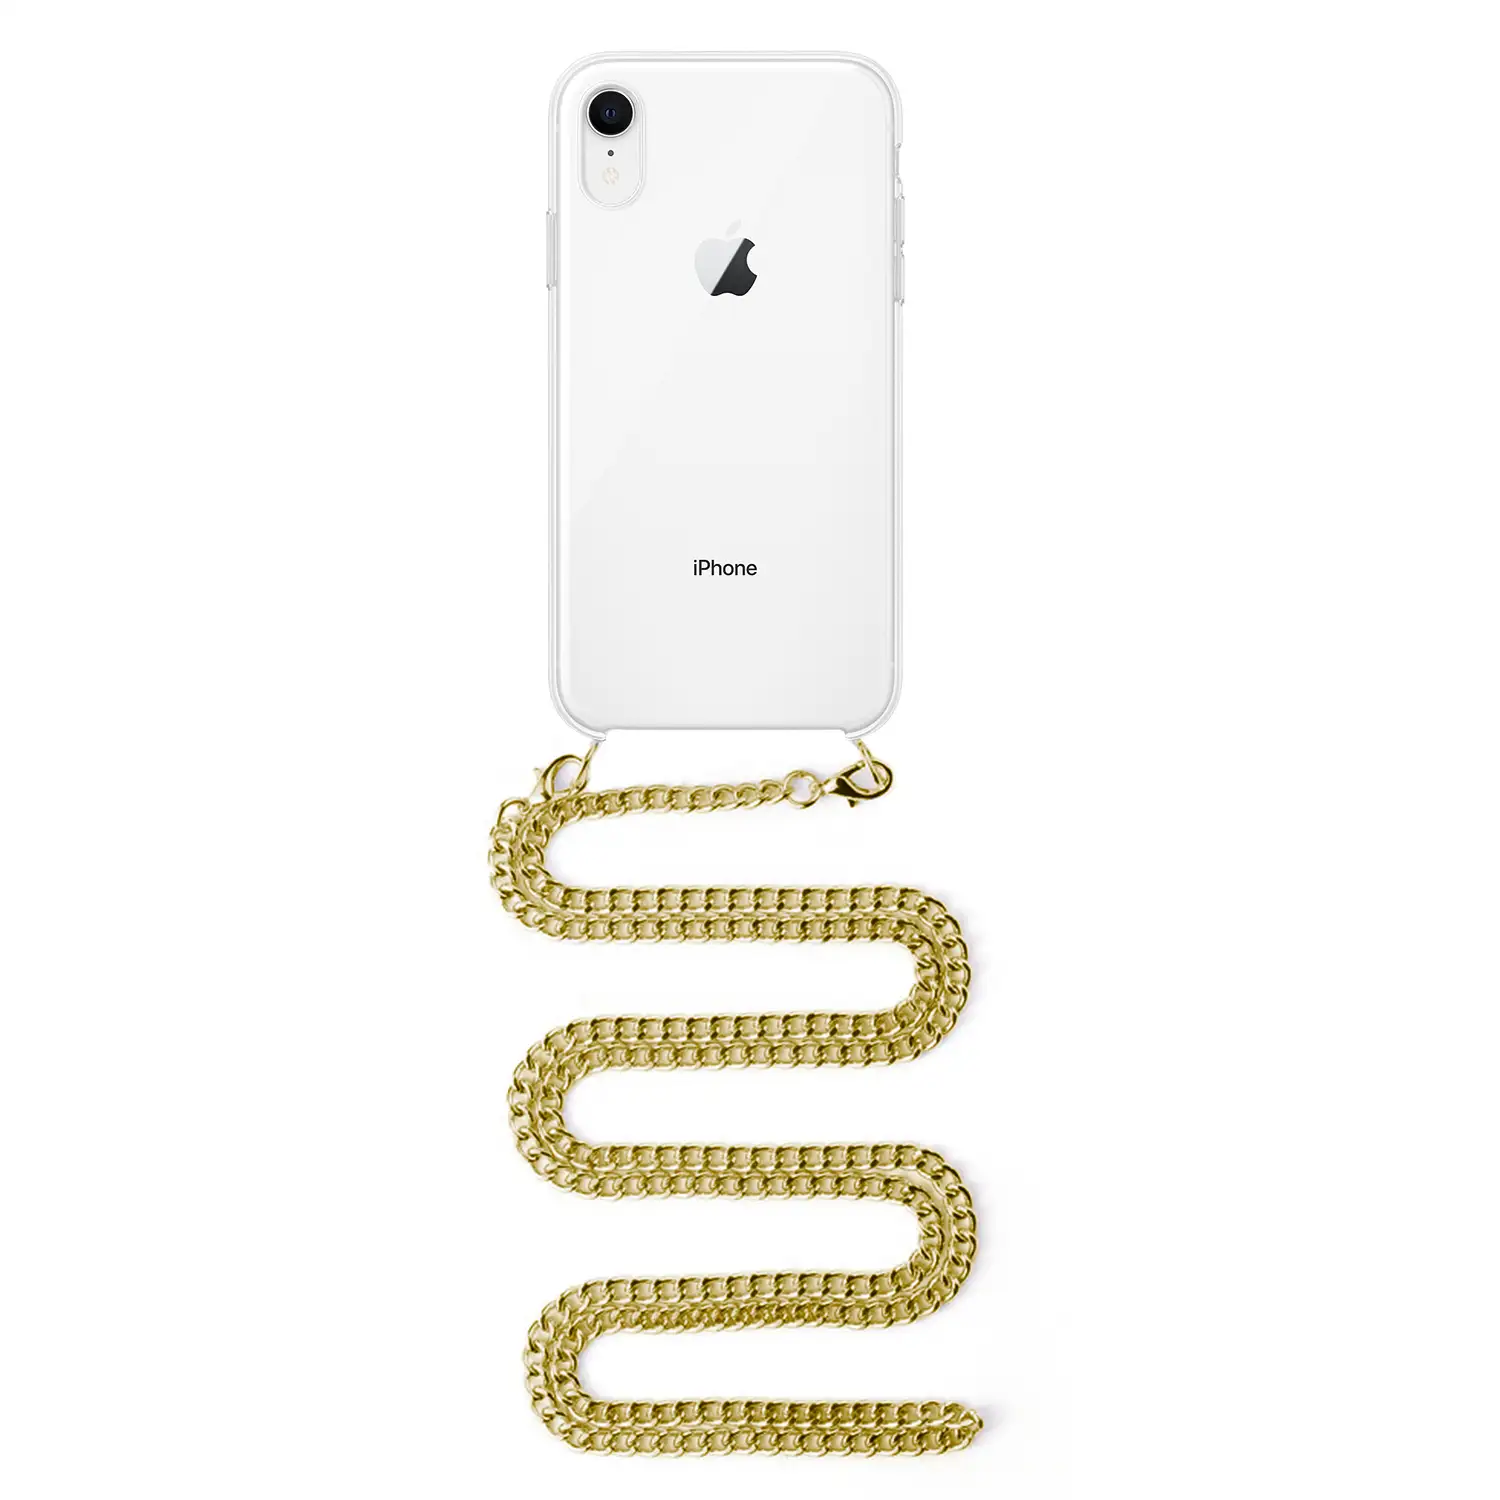 Carcasa transparente iPhone XR con colgante cadena metálica